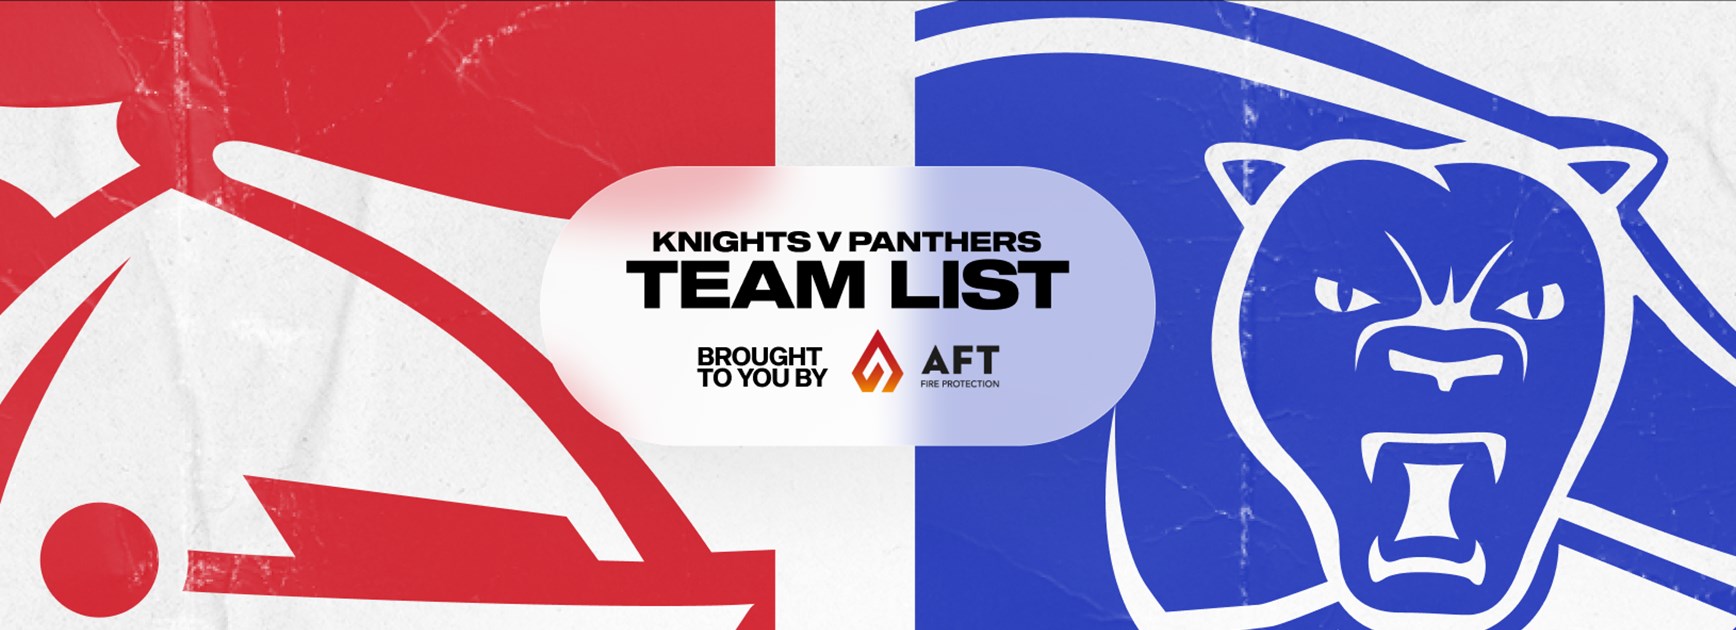 Knights v Panthers Round 15 NRL team list